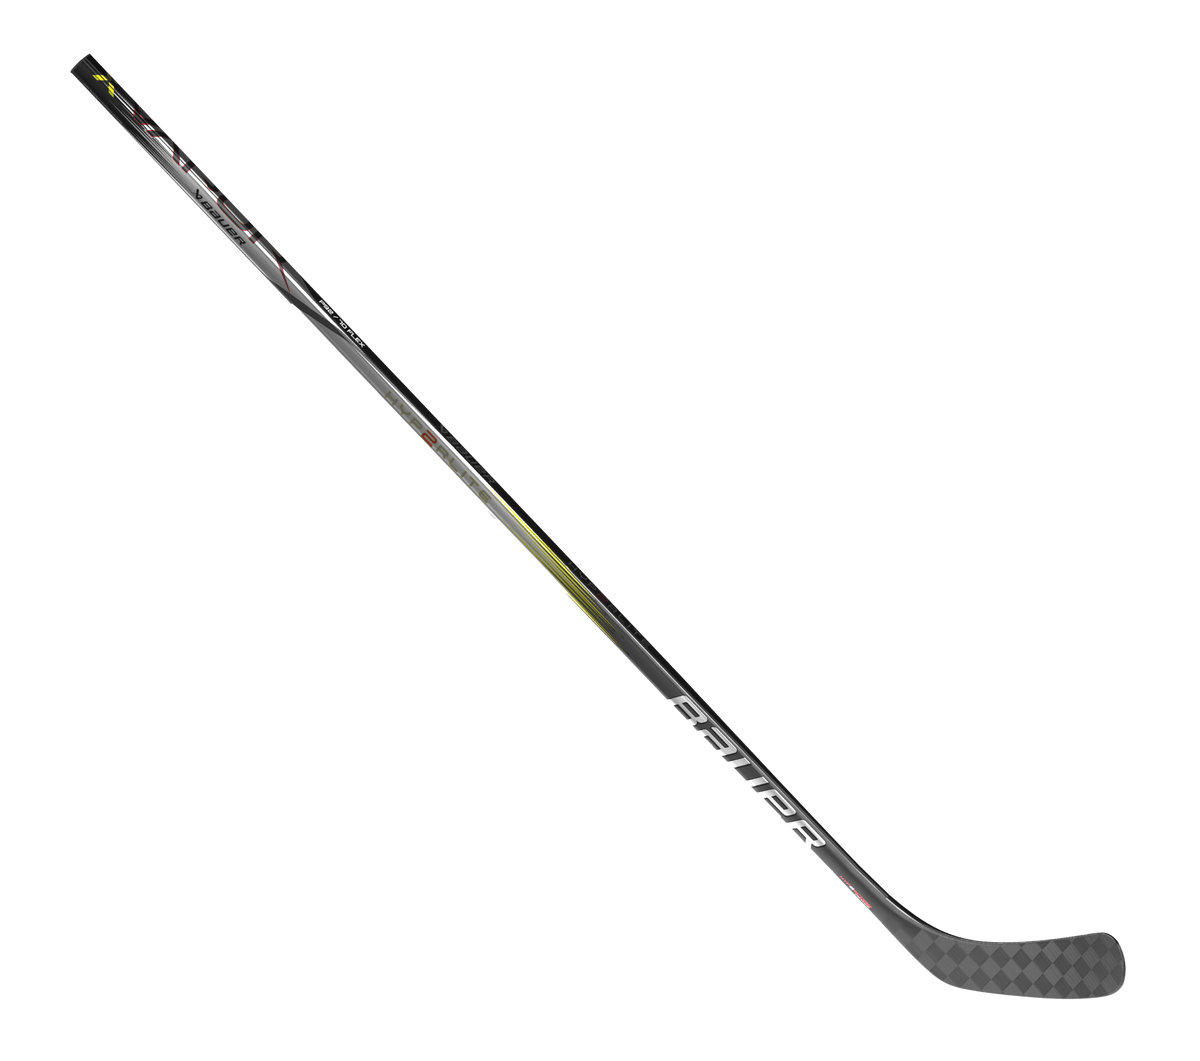 Bauer Vapor Hyperlite2 Senior Hockey Stick